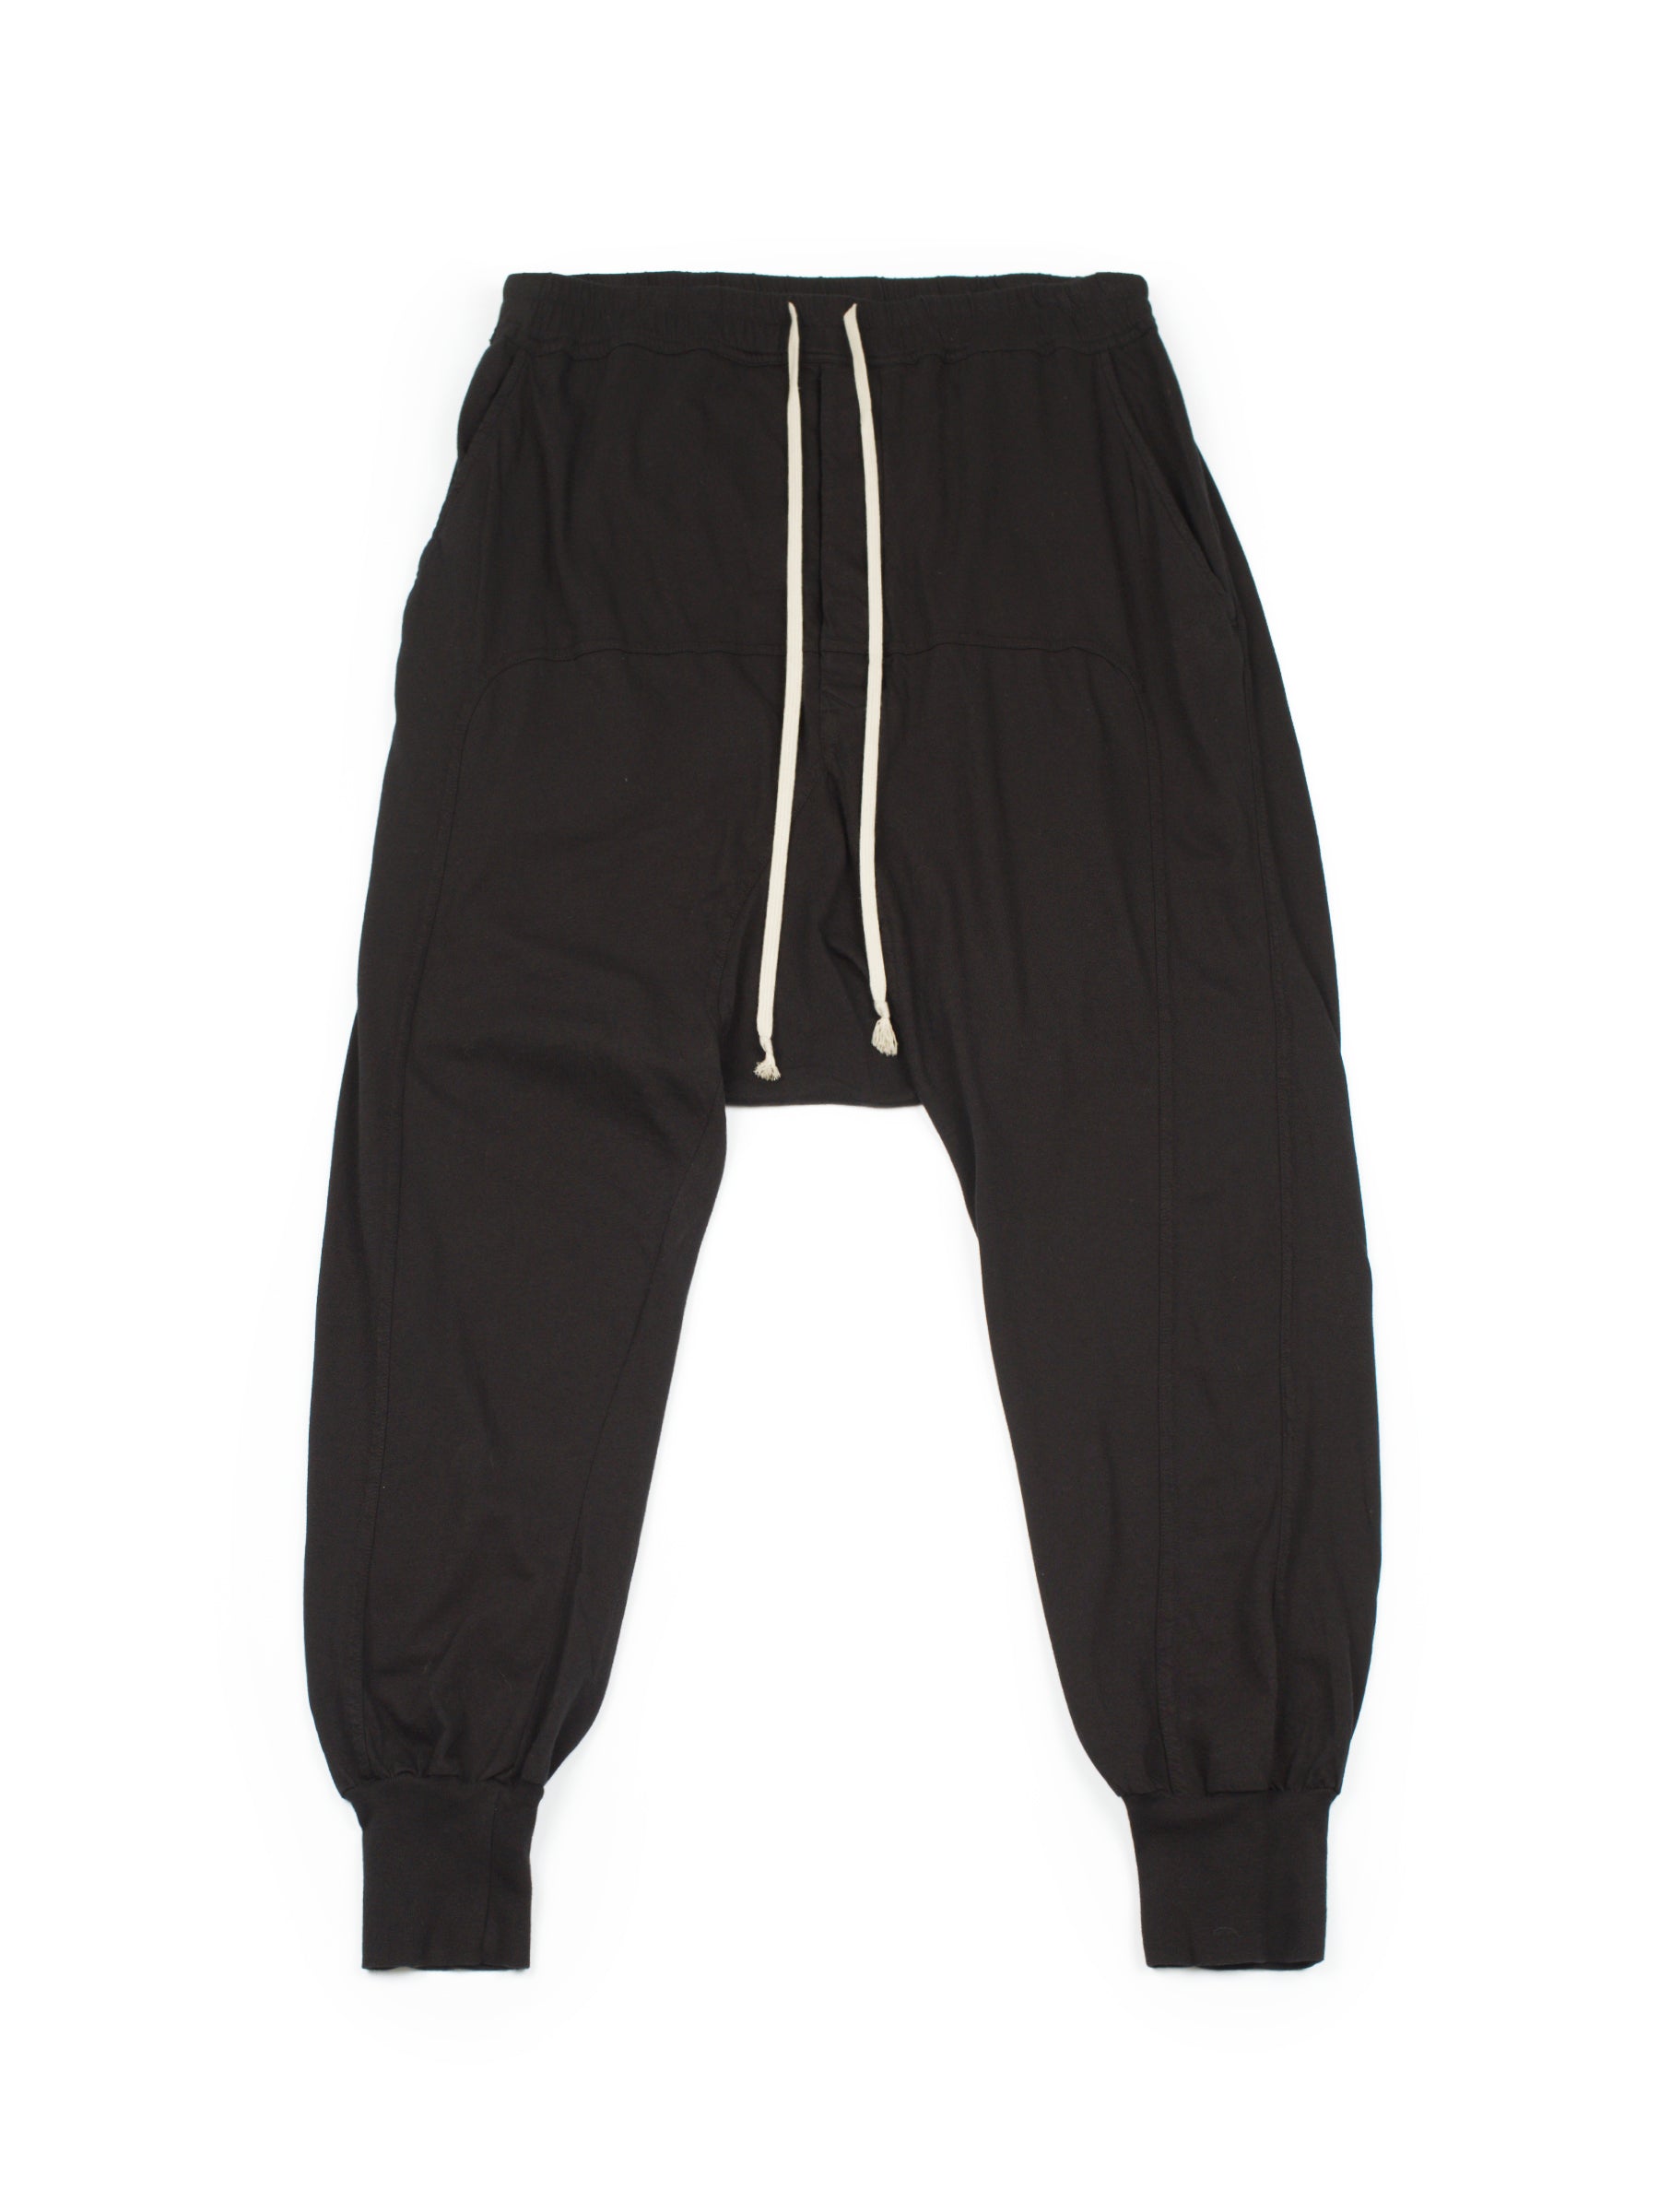 Rick Owens DRKSHDW Prisoner Pants Mサイズ 黒 - パンツ